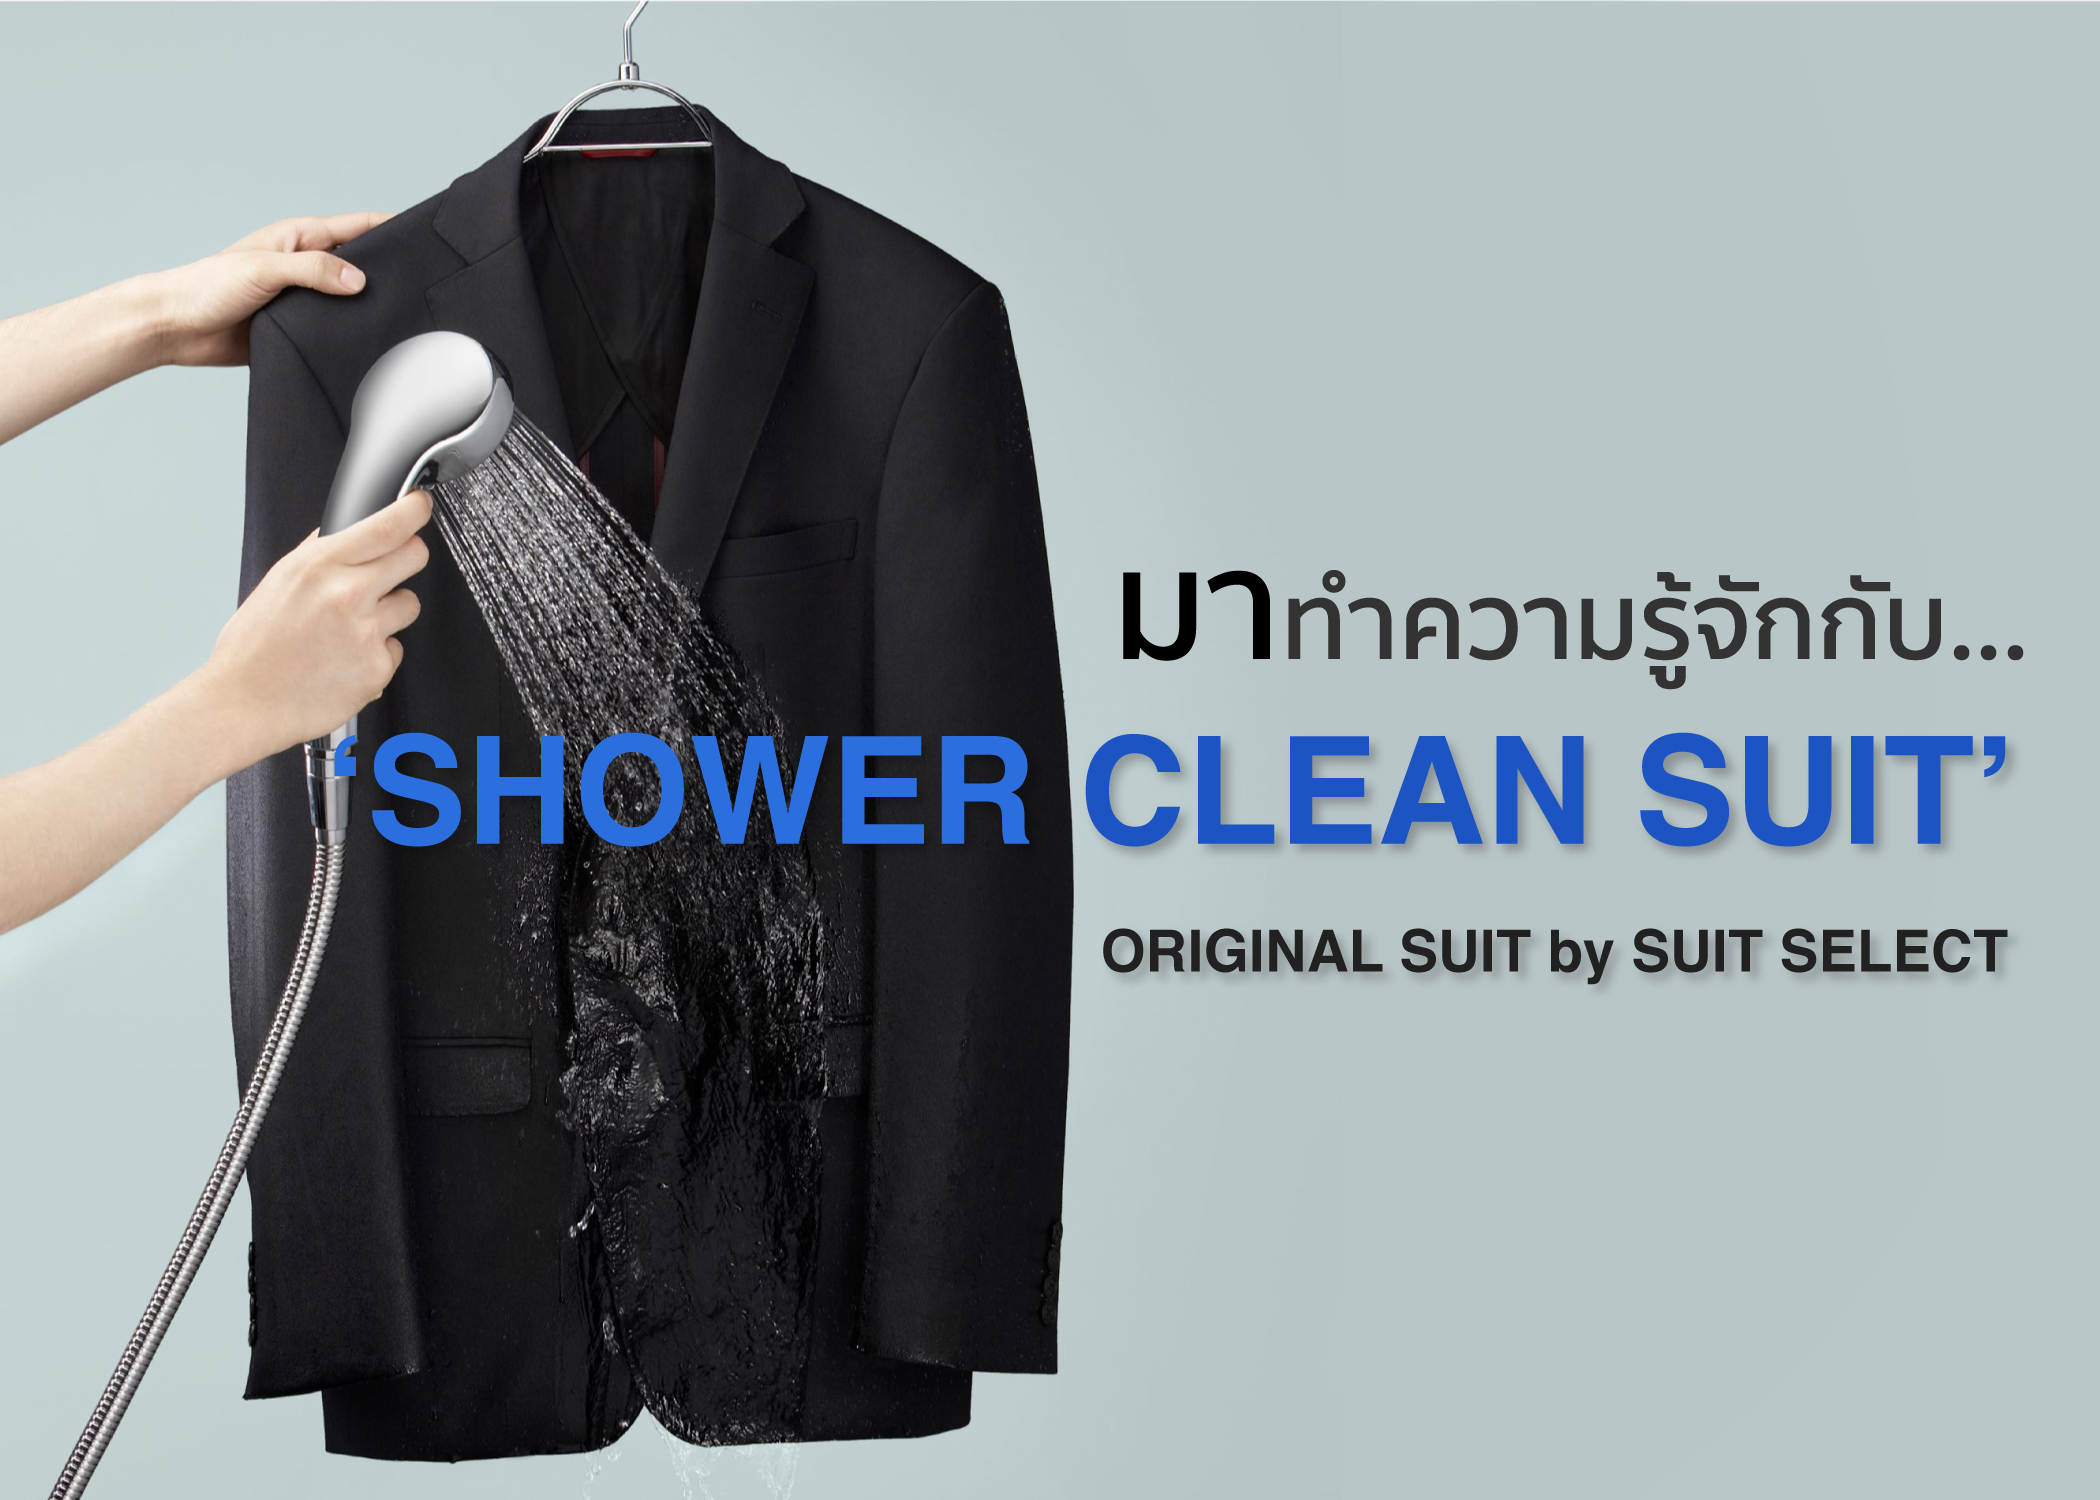 Shower Clean Suit สูทออริจินอลรุ่นพิเศษ เฉพาะที่ SUIT SELECT เท่านั้น!